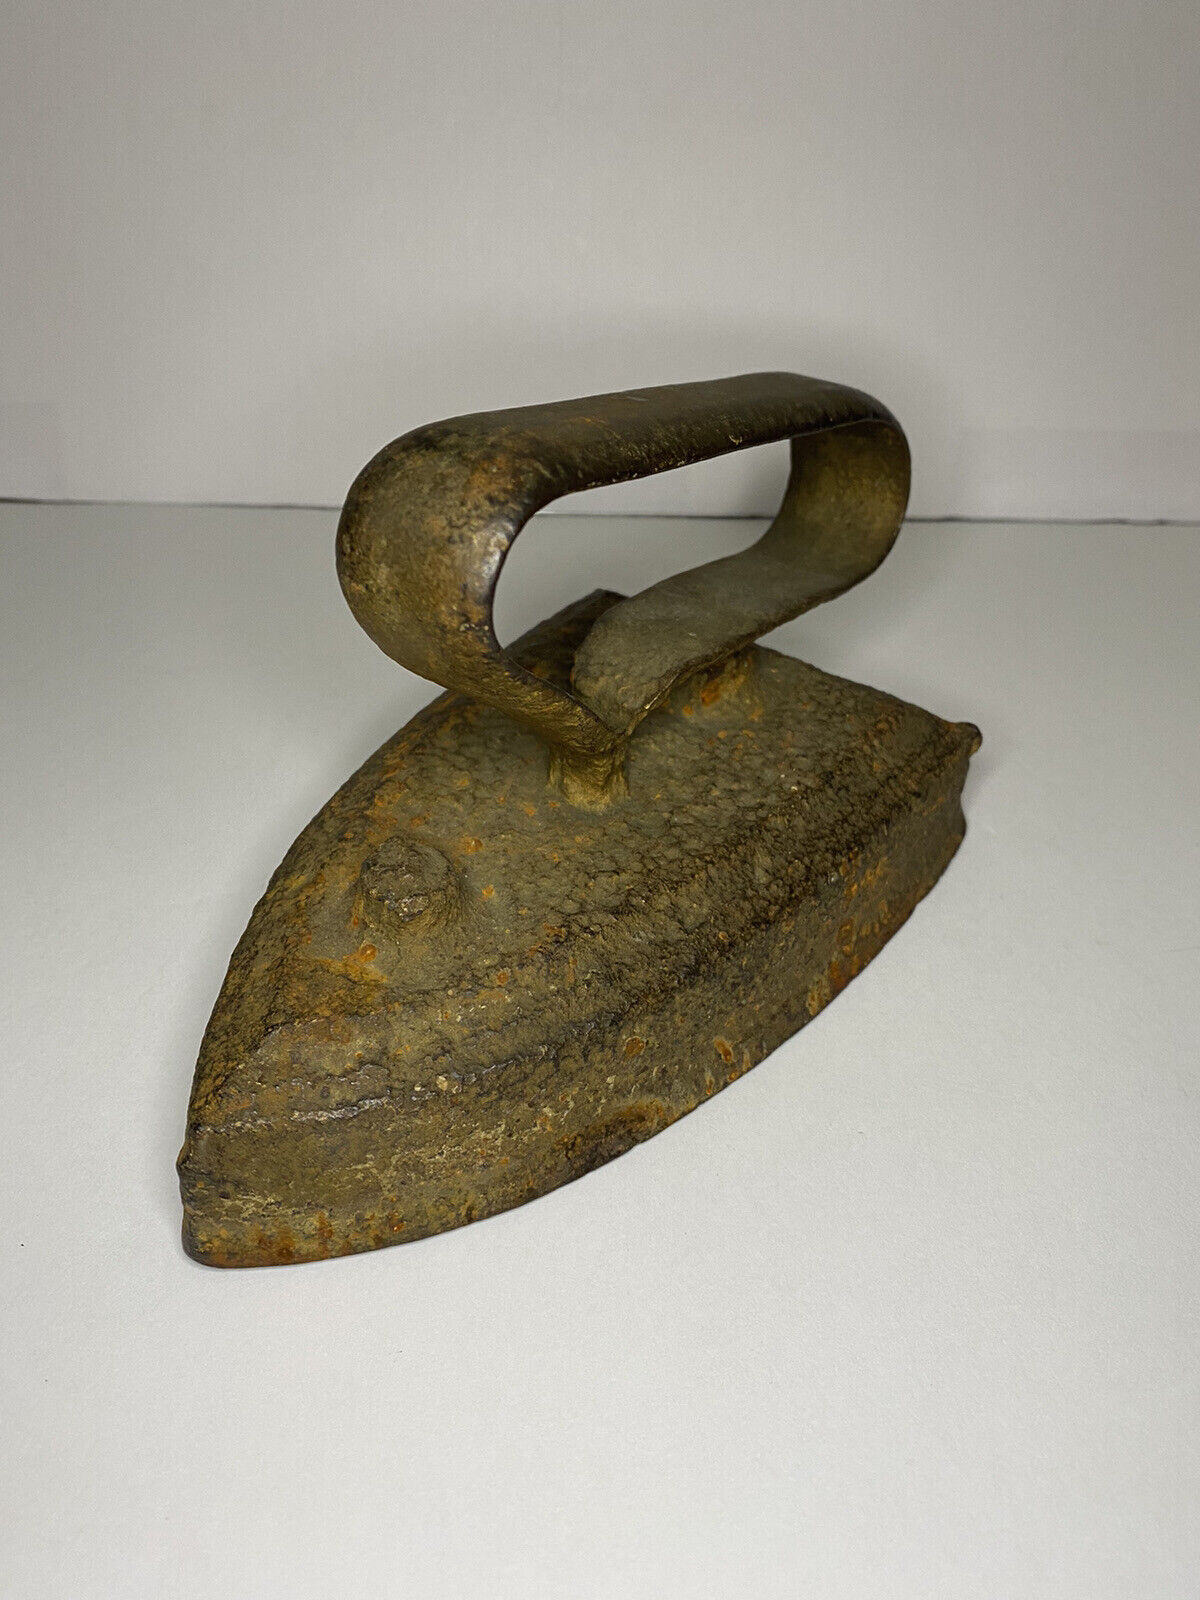 Antique Cast Iron Sad Iron- Early-Mid 19th Century Primitive Americana